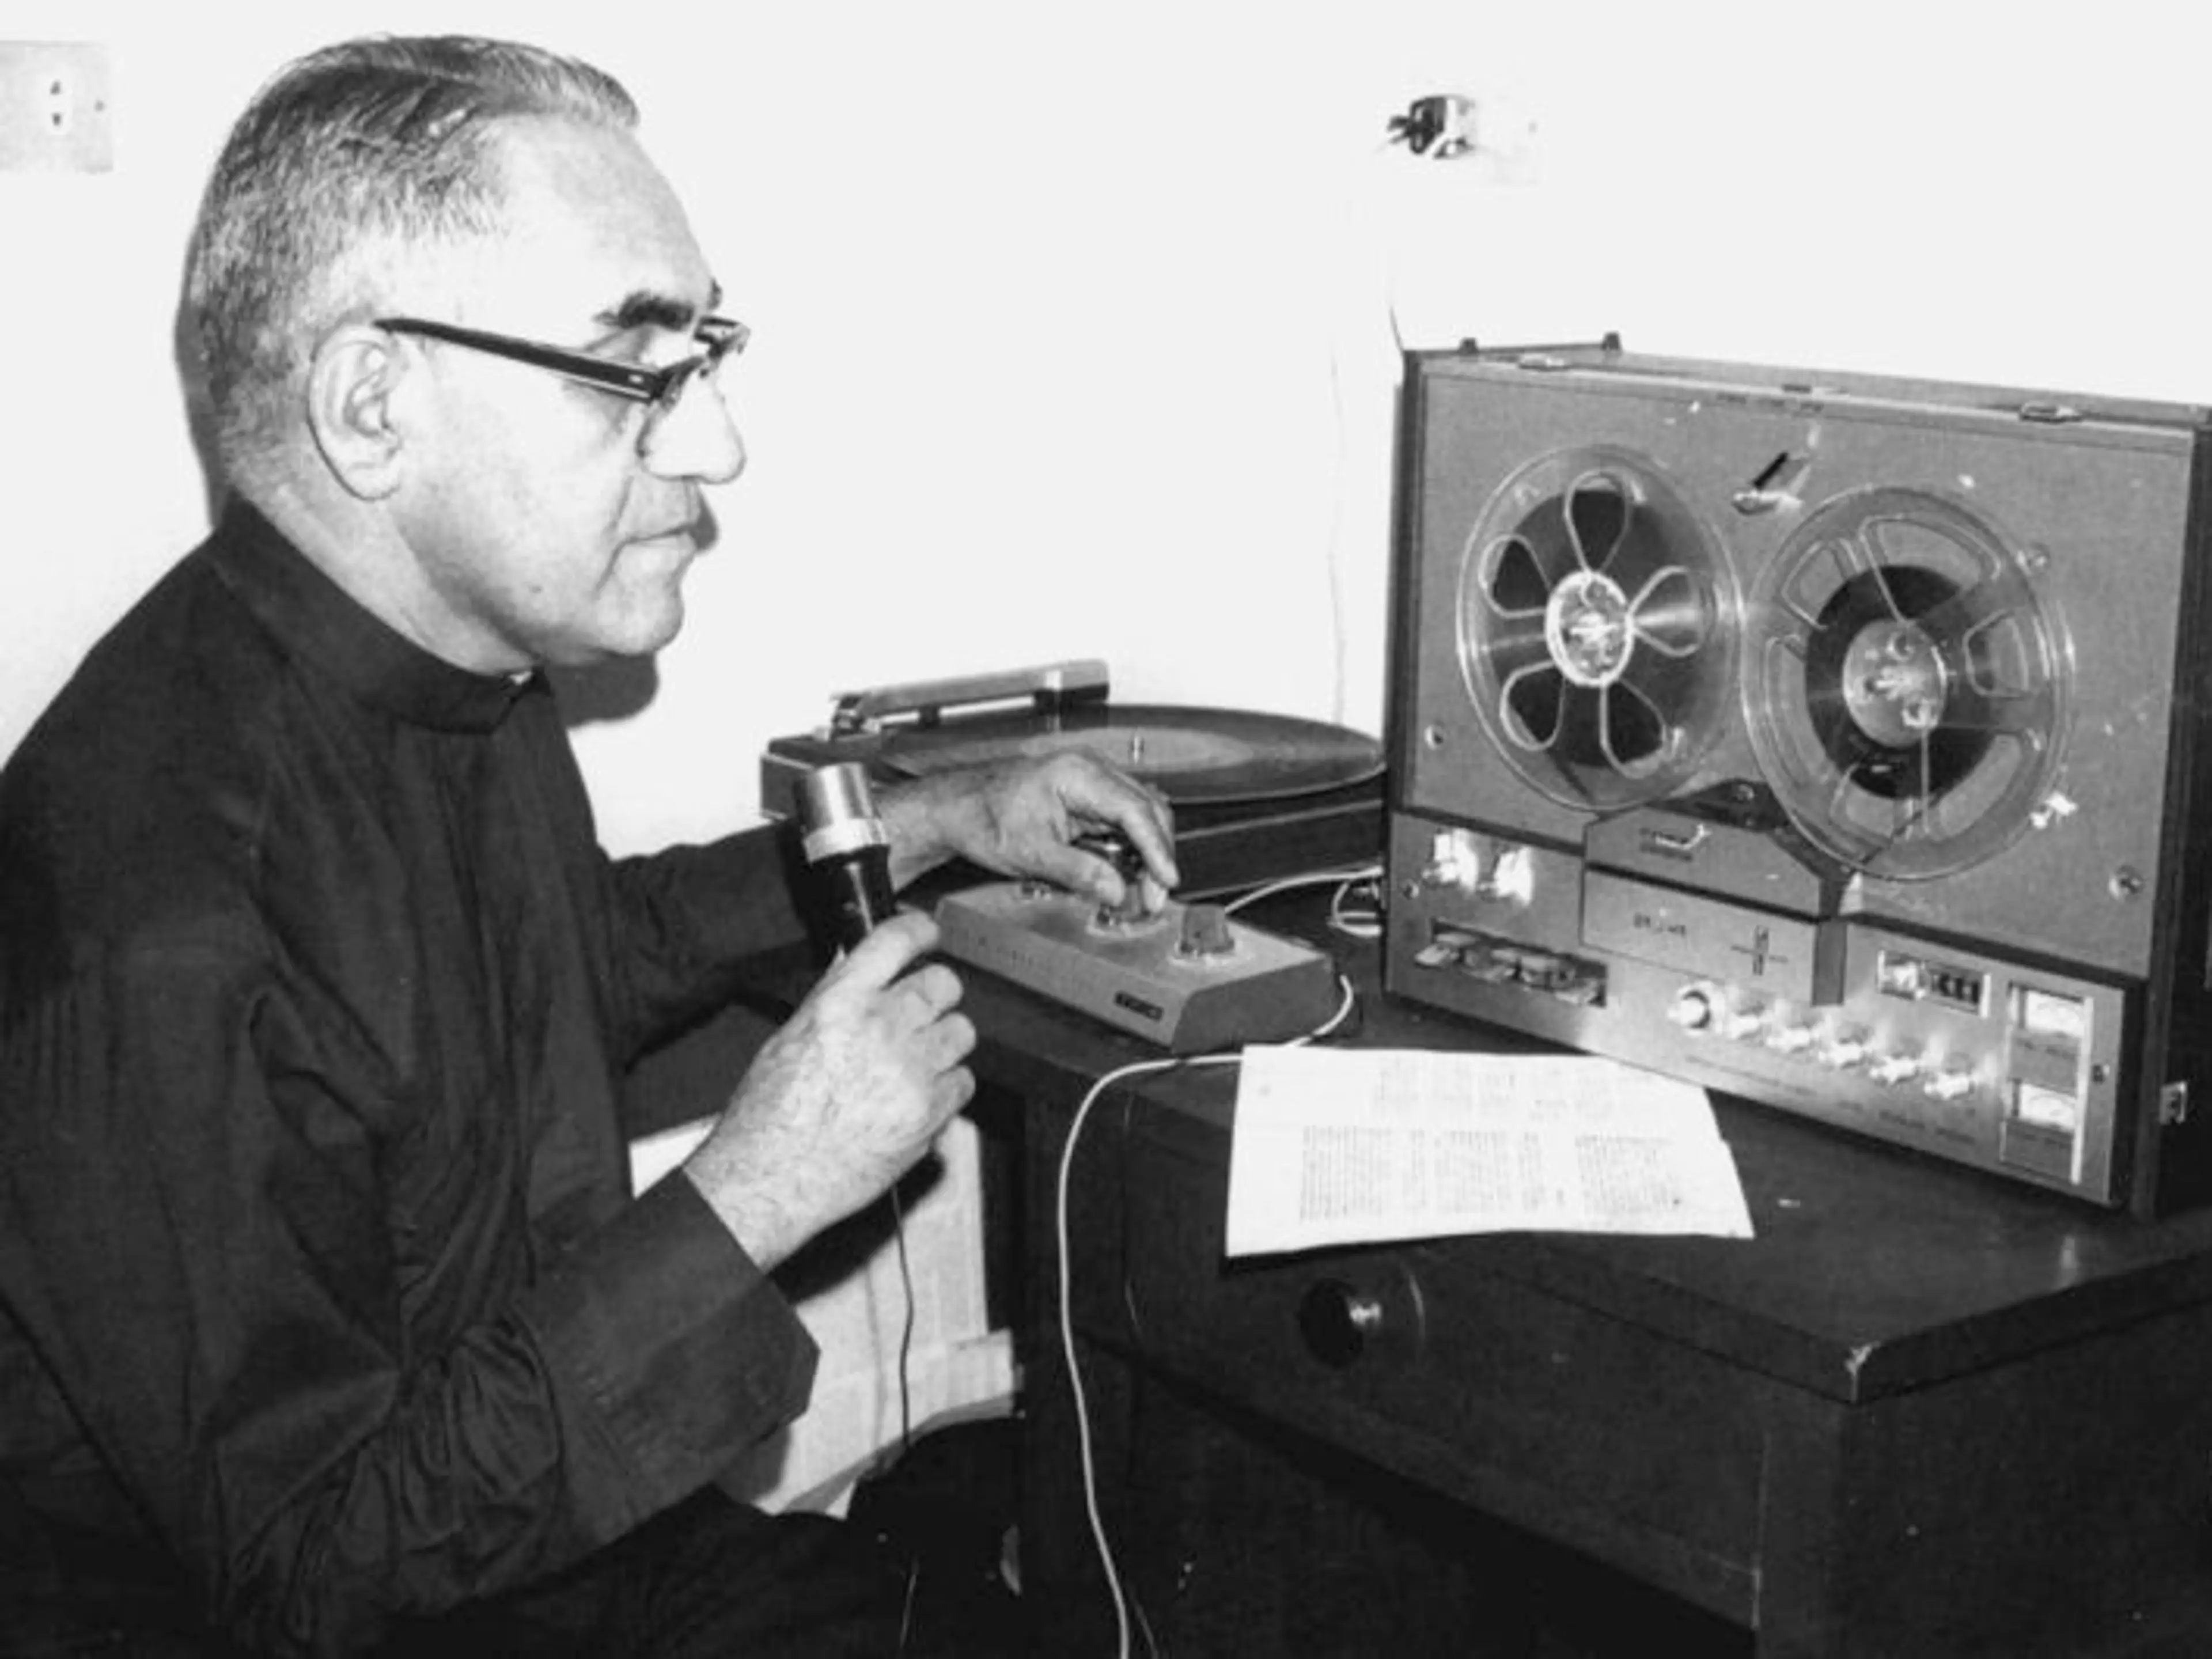 Oscar Romero broadcasting his sermon by radio